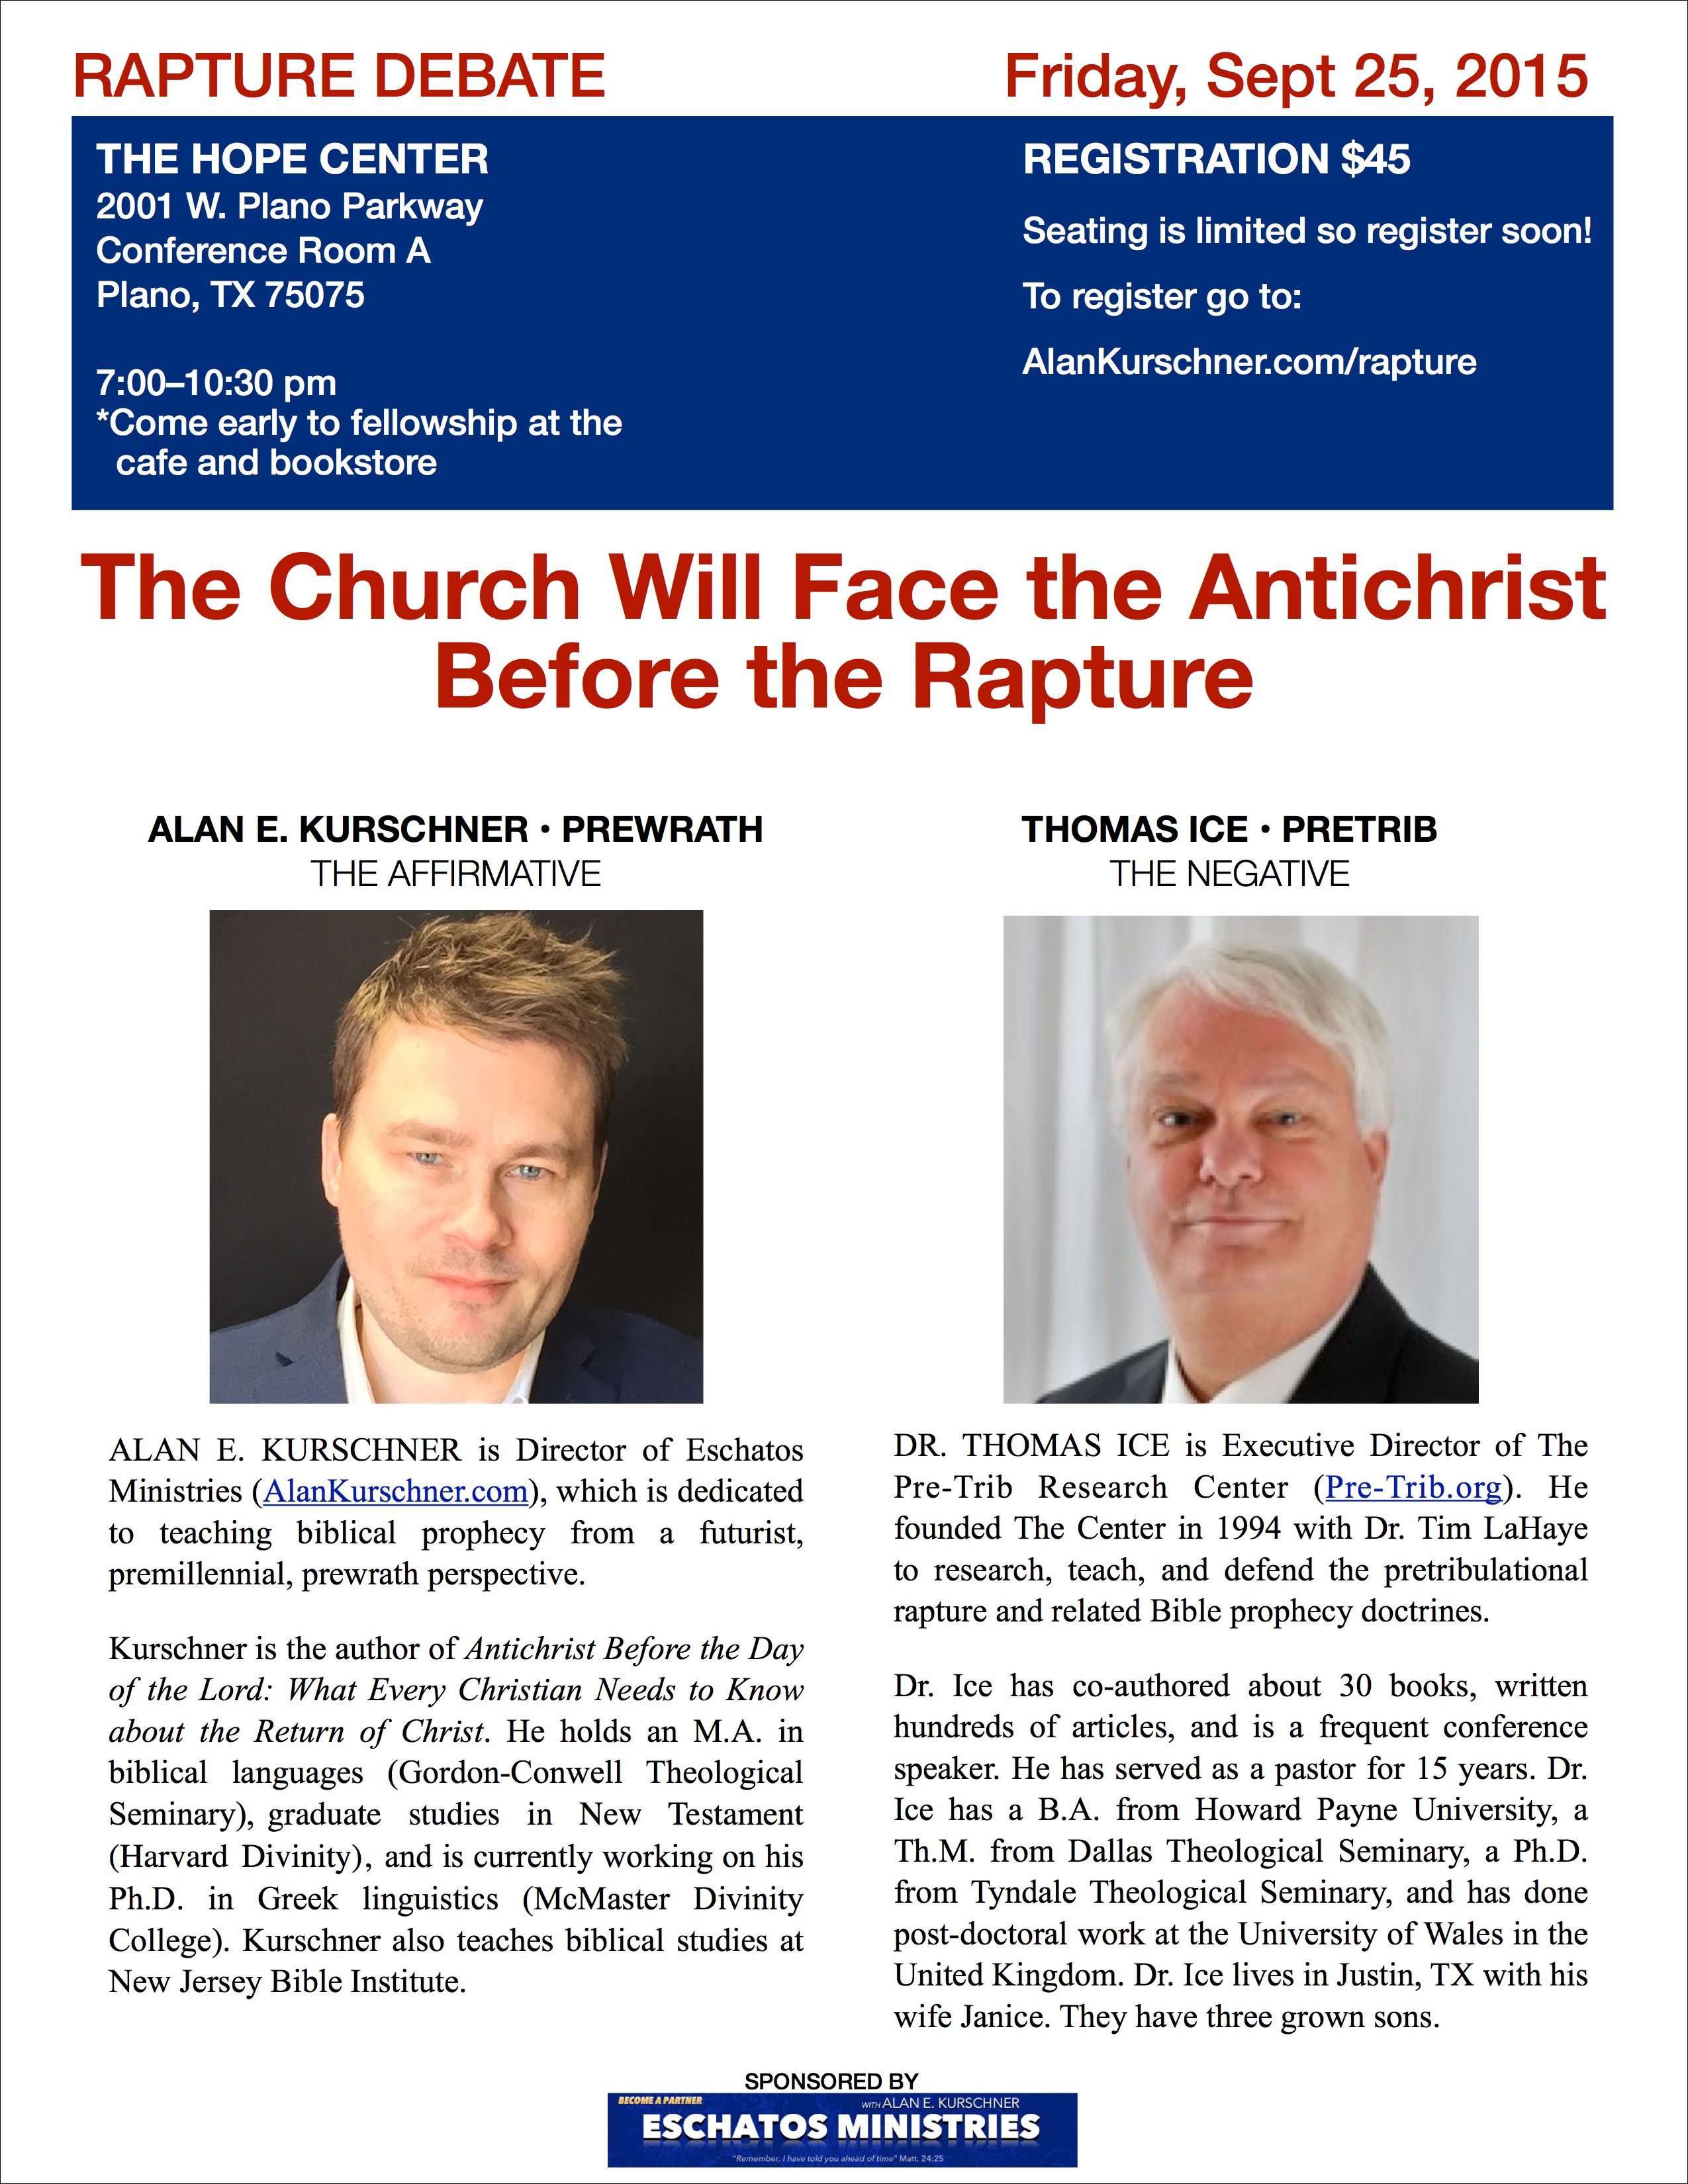 Alan Kurschner Thomas Ice Rapture debate prewrath pretrib